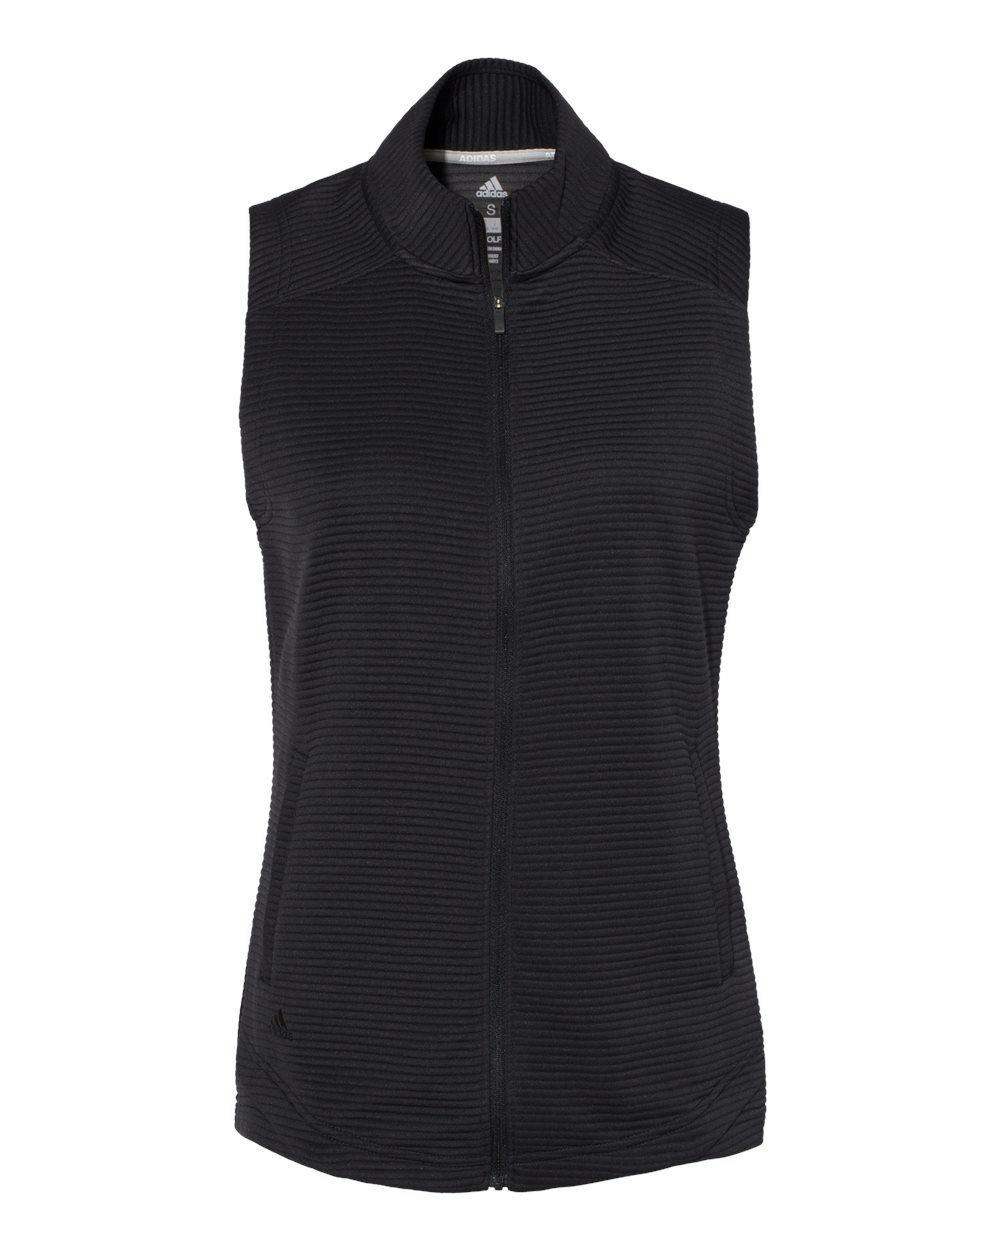 Image for Women's Textured Full-Zip Vest - A417